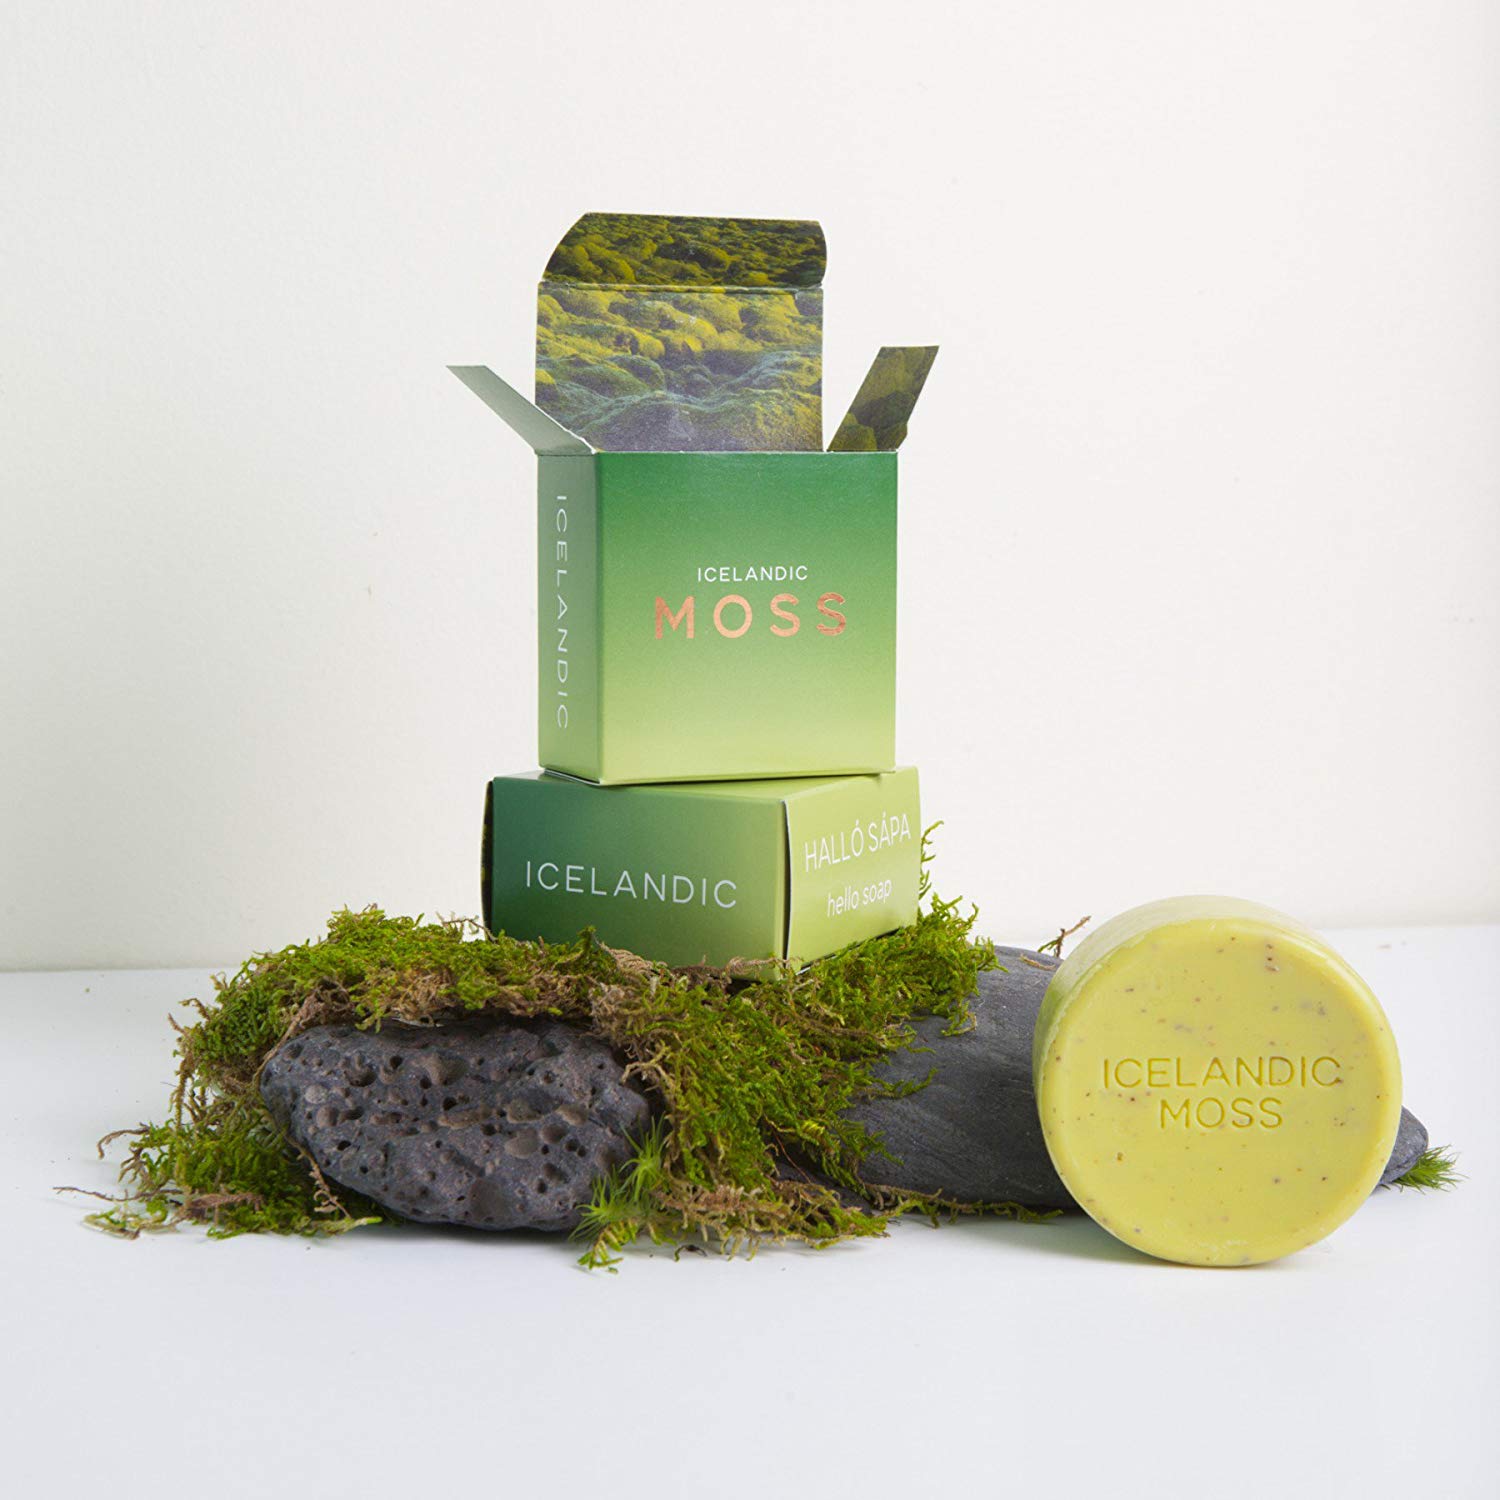 Amazon.com : Kalastyle Hallo Sapa Icelandic Moss Soap - 4.3 oz : Beauty